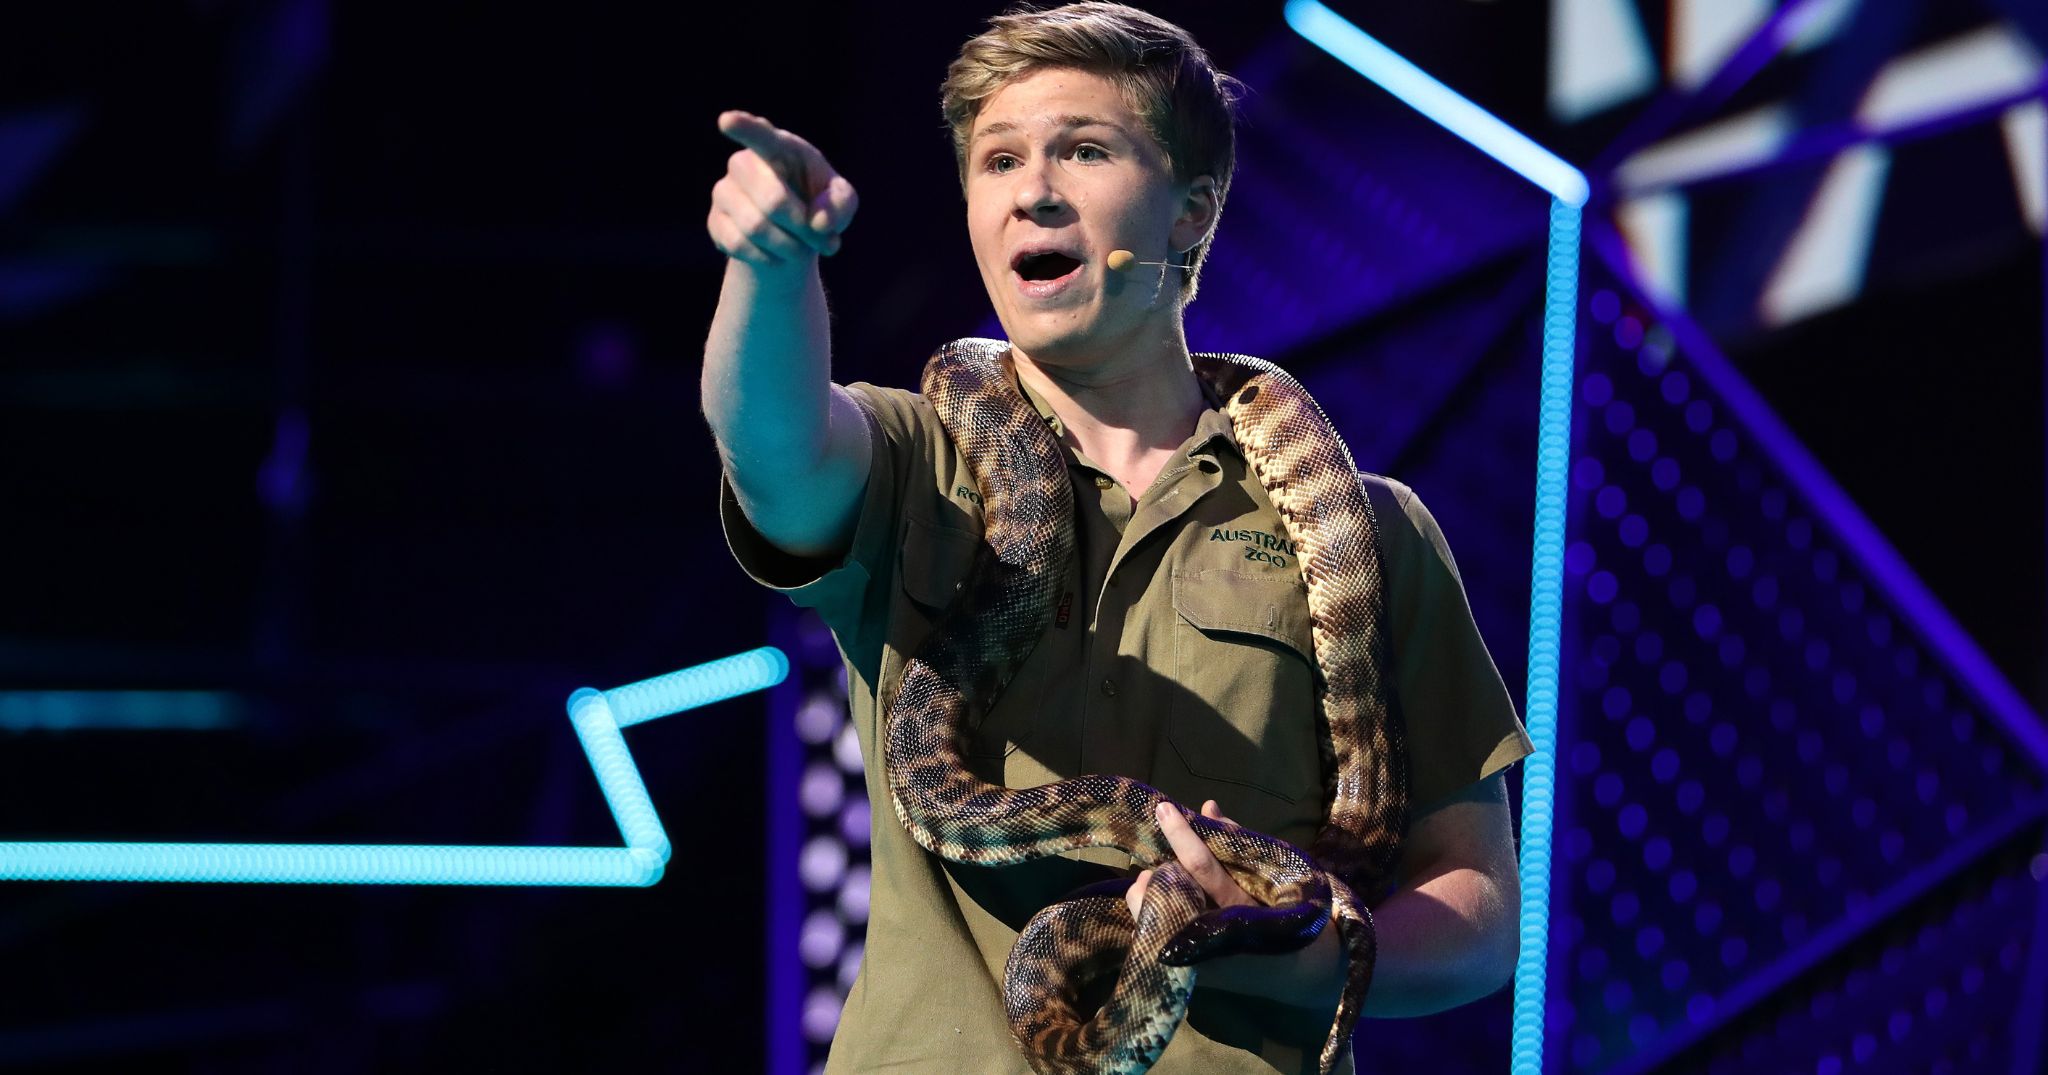 Robert Irwin, son of Steve Irwin the "Crocodile Hunter," speaks during the 33rd Annual ARIA Awards 2019 in Sydney, Australia, on Nov. 27, 2019.